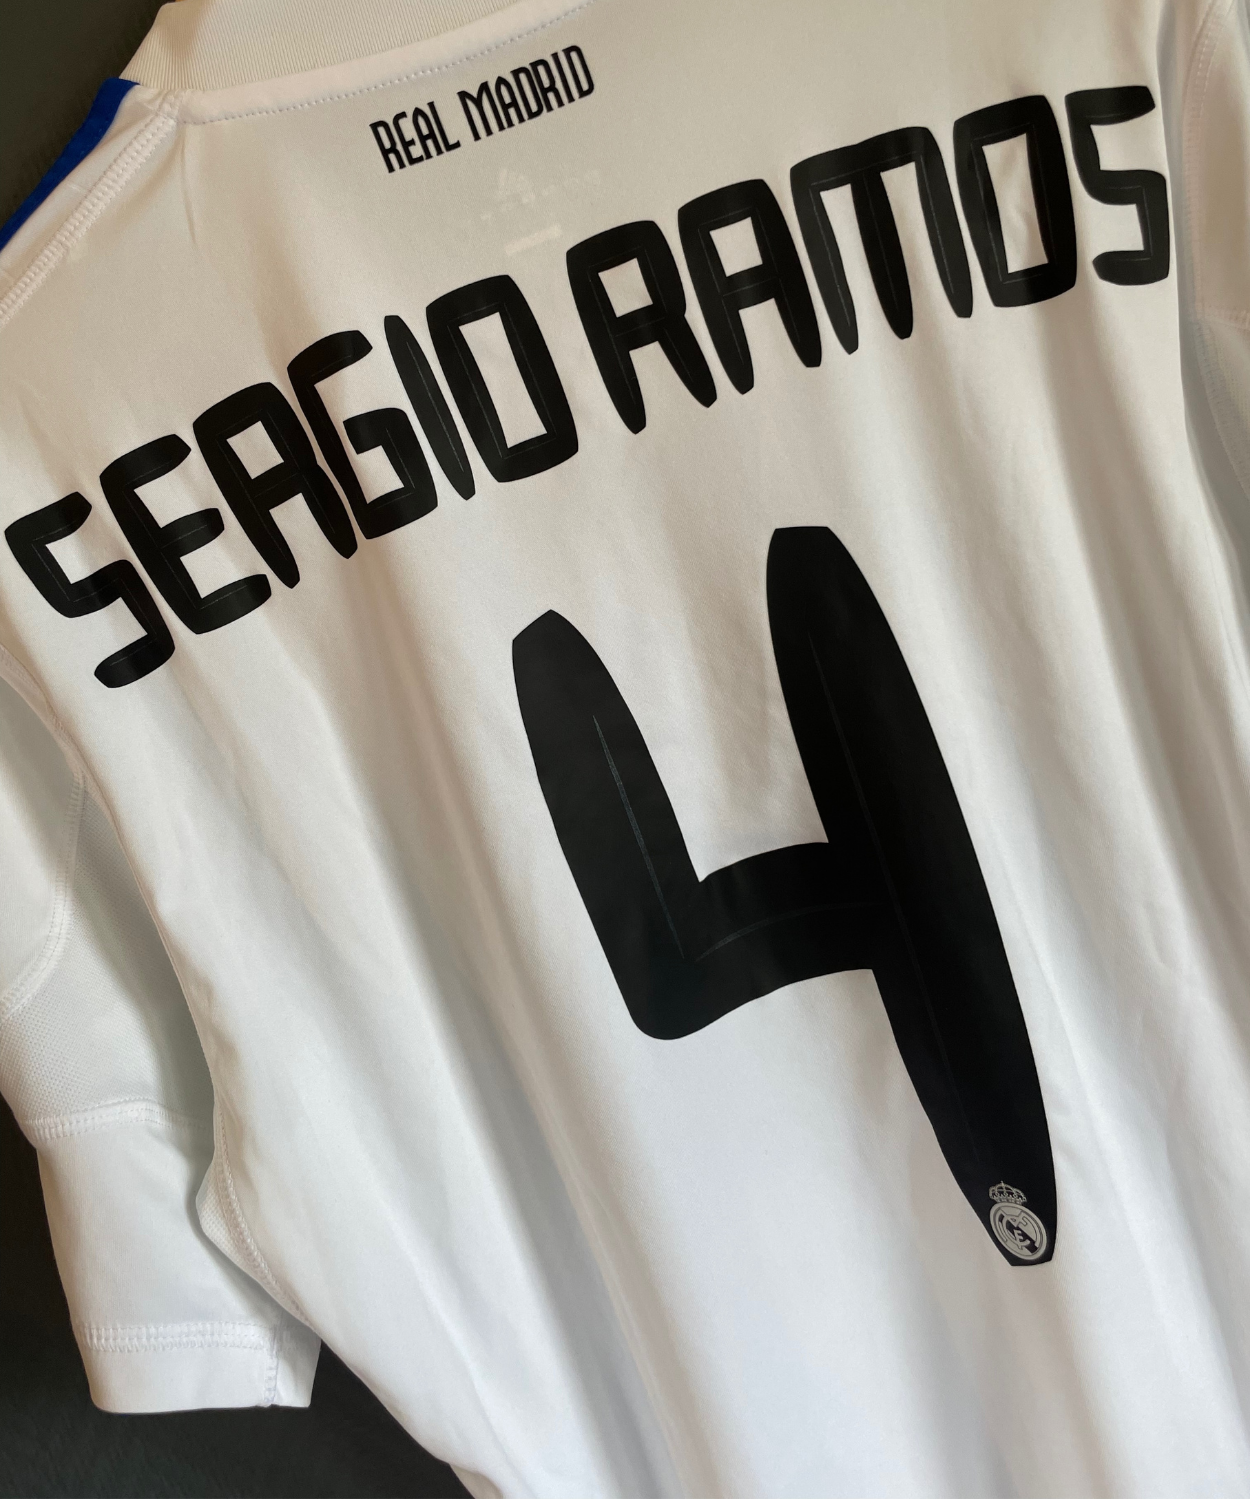 Real Madrid 2010/11 Sergio Ramos Home kit (M)